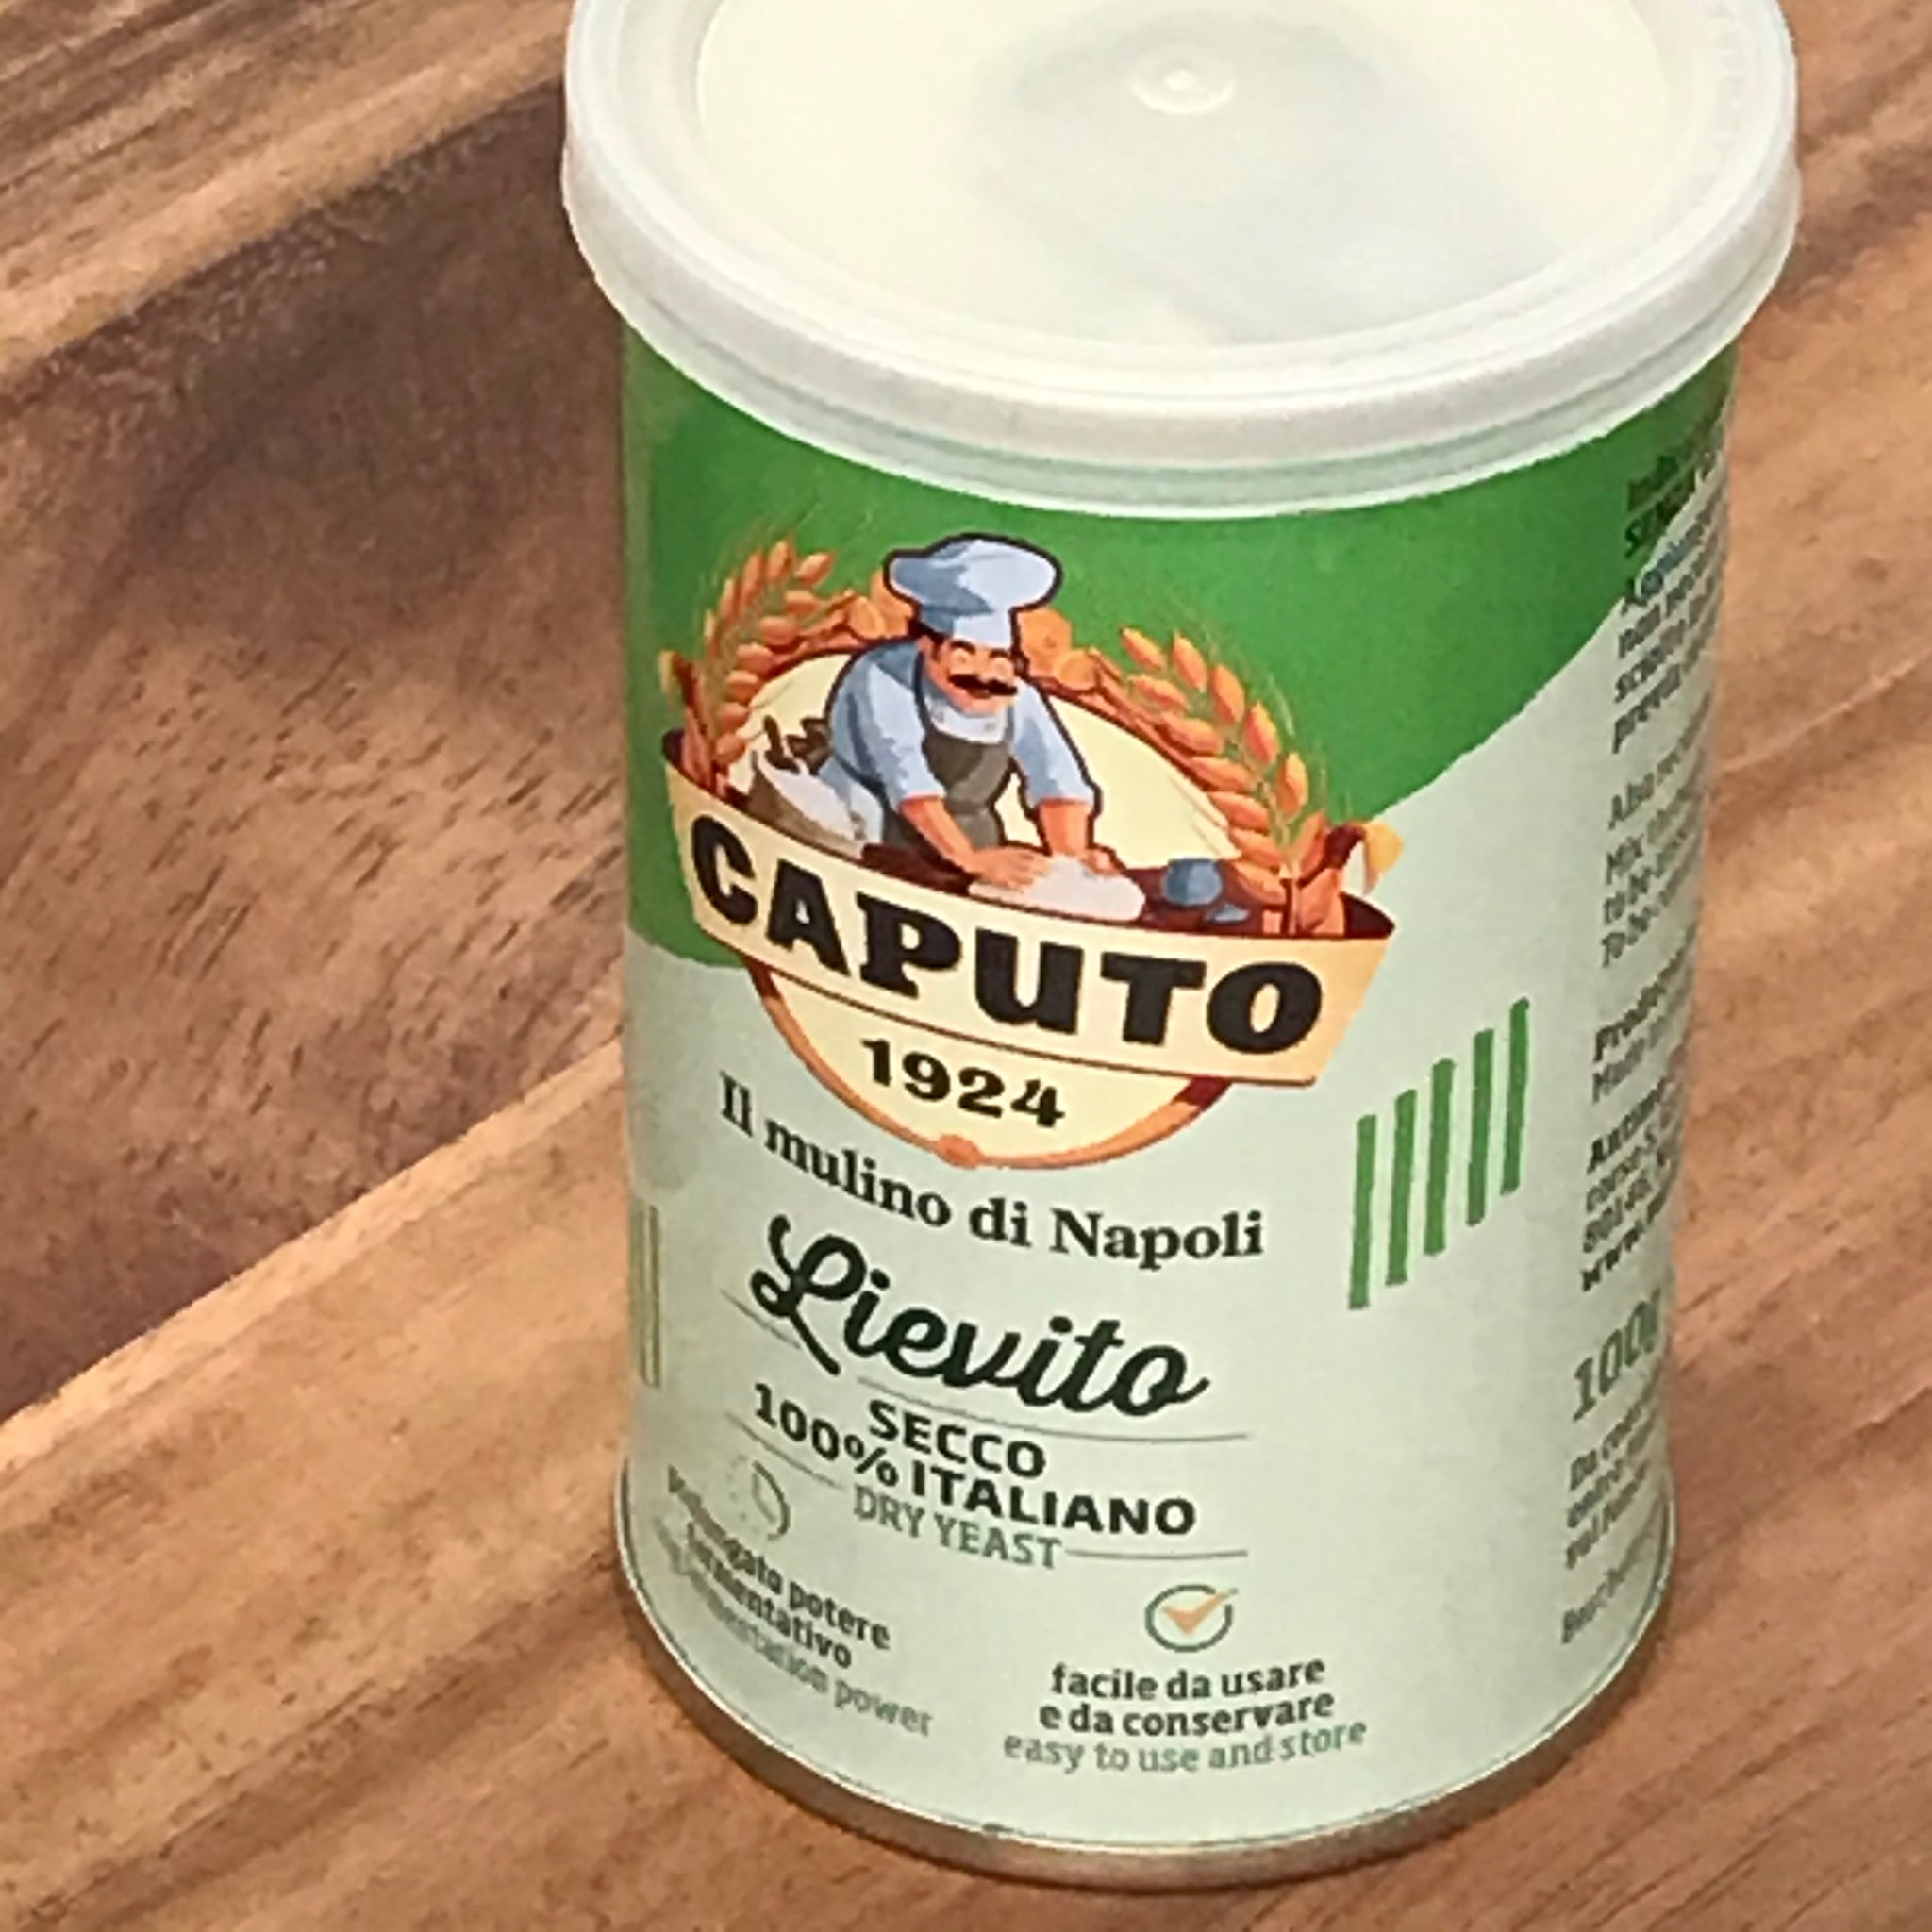 Caputo Yeast (3.5 oz) – DiGiacomo Brothers Specialty Food Company